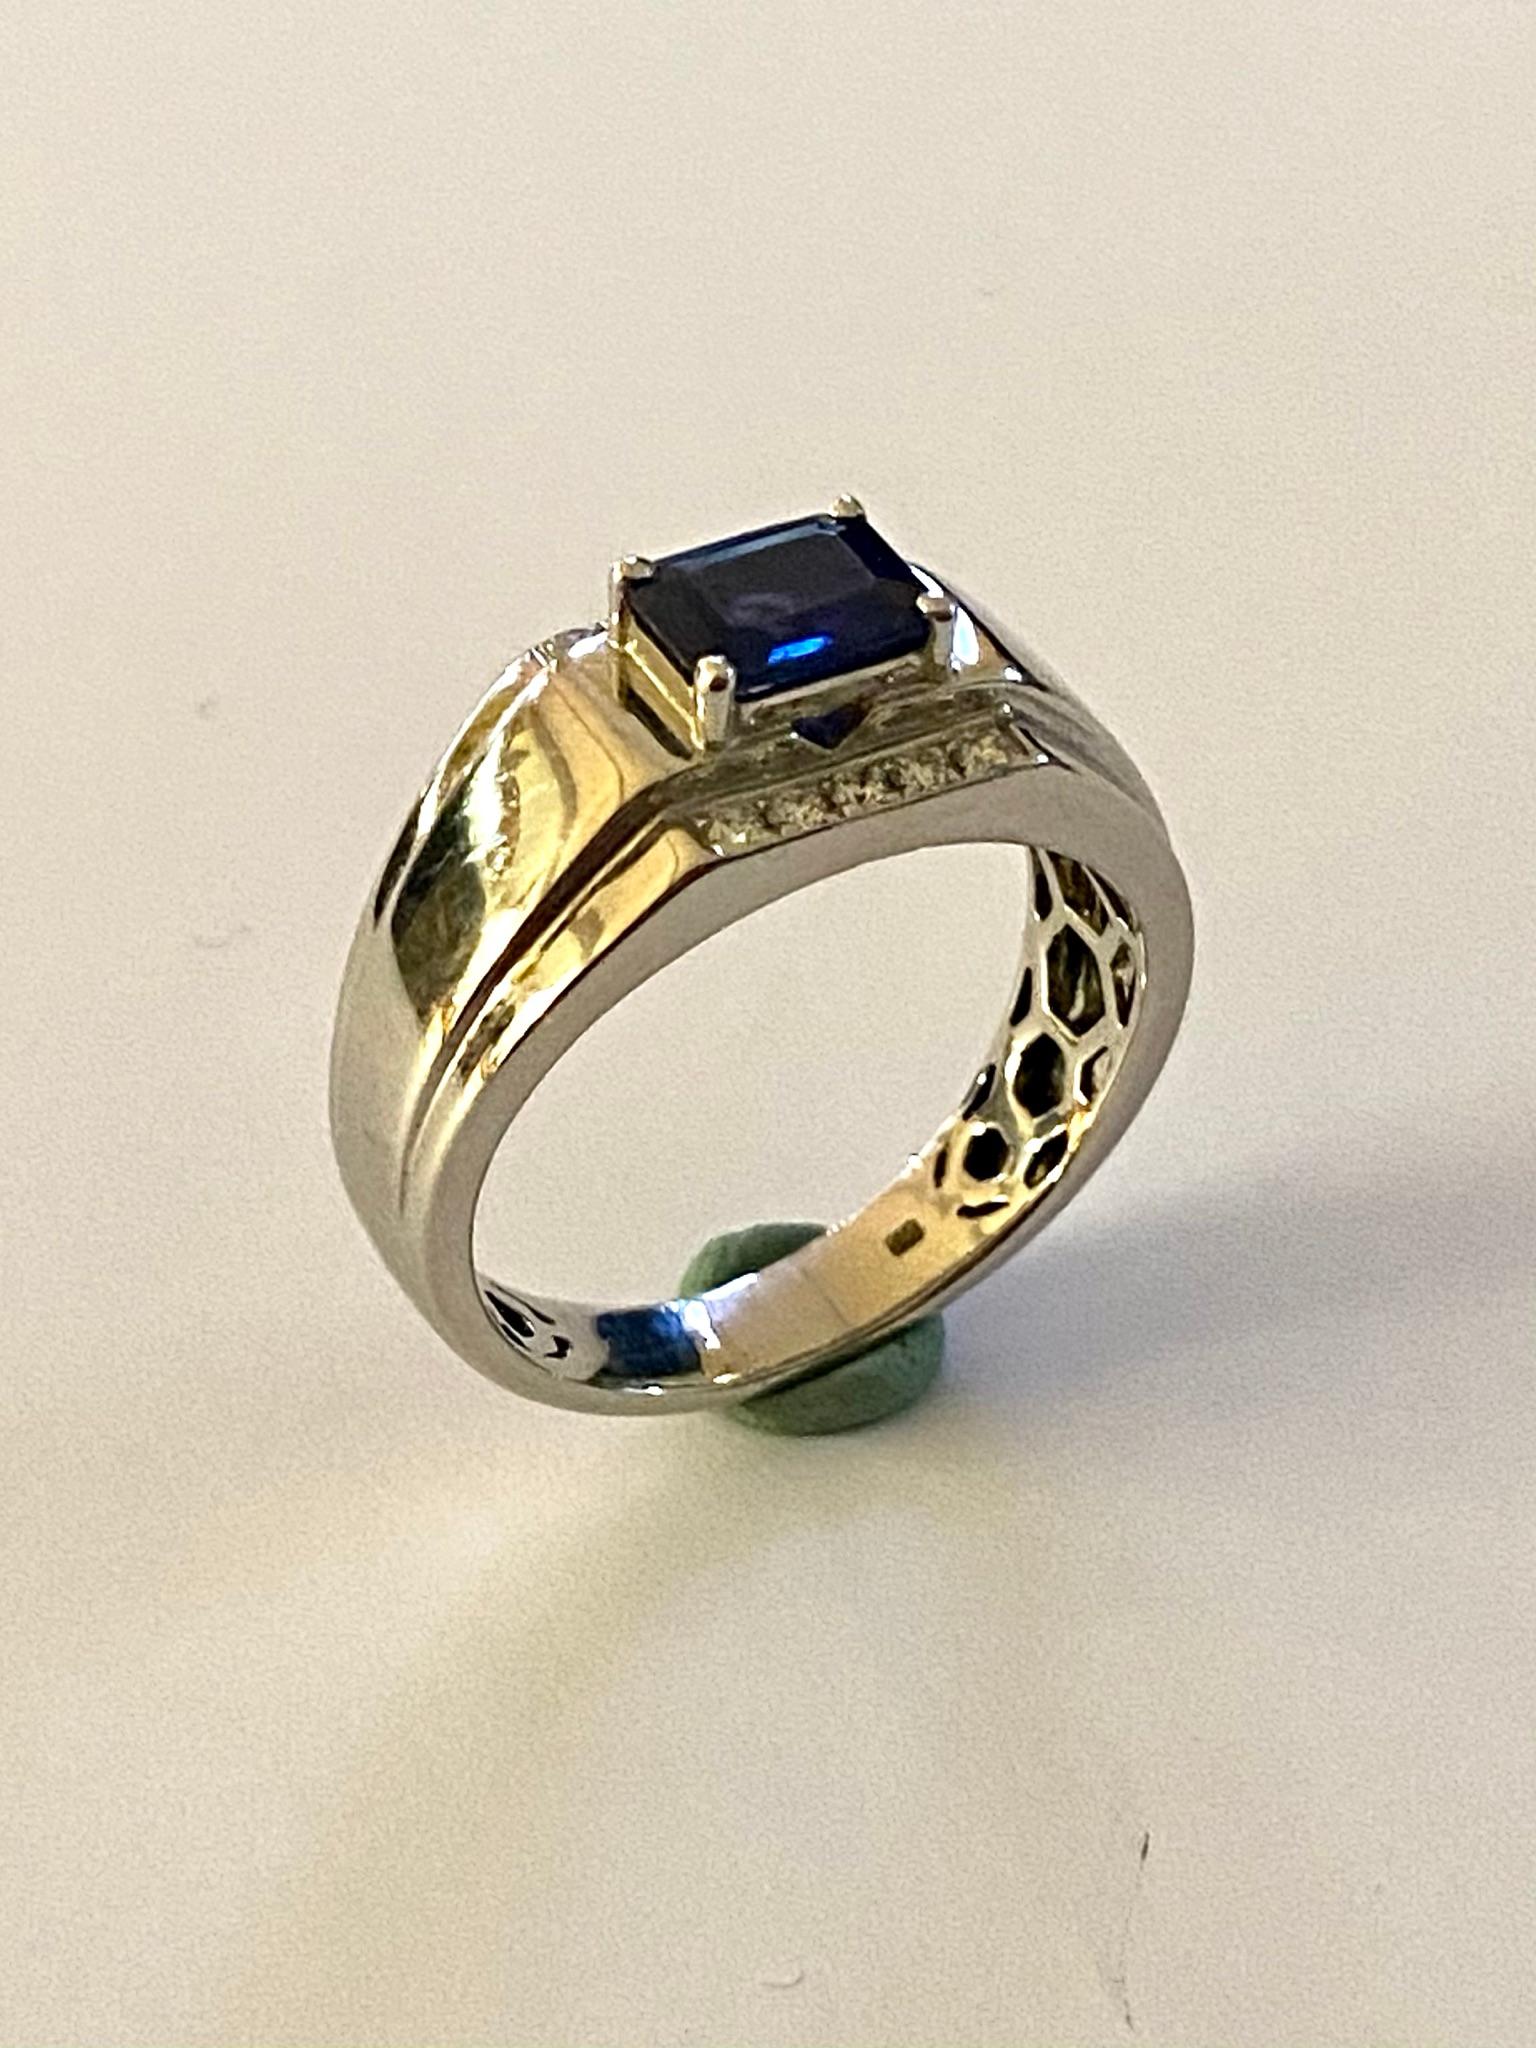 One (1) 18k. White Gold Sapphire & Diamond Ring.
1 Natural Corundum, Sapphire, Emerald, step cut  = 6.6 x 5.3 x 2.7 mm  = 1.00 Carat  (indications of heating present)
10 natural Diamonds, round Brillilant = 0.15 ct (total)  VSI - SI  F-G
Total